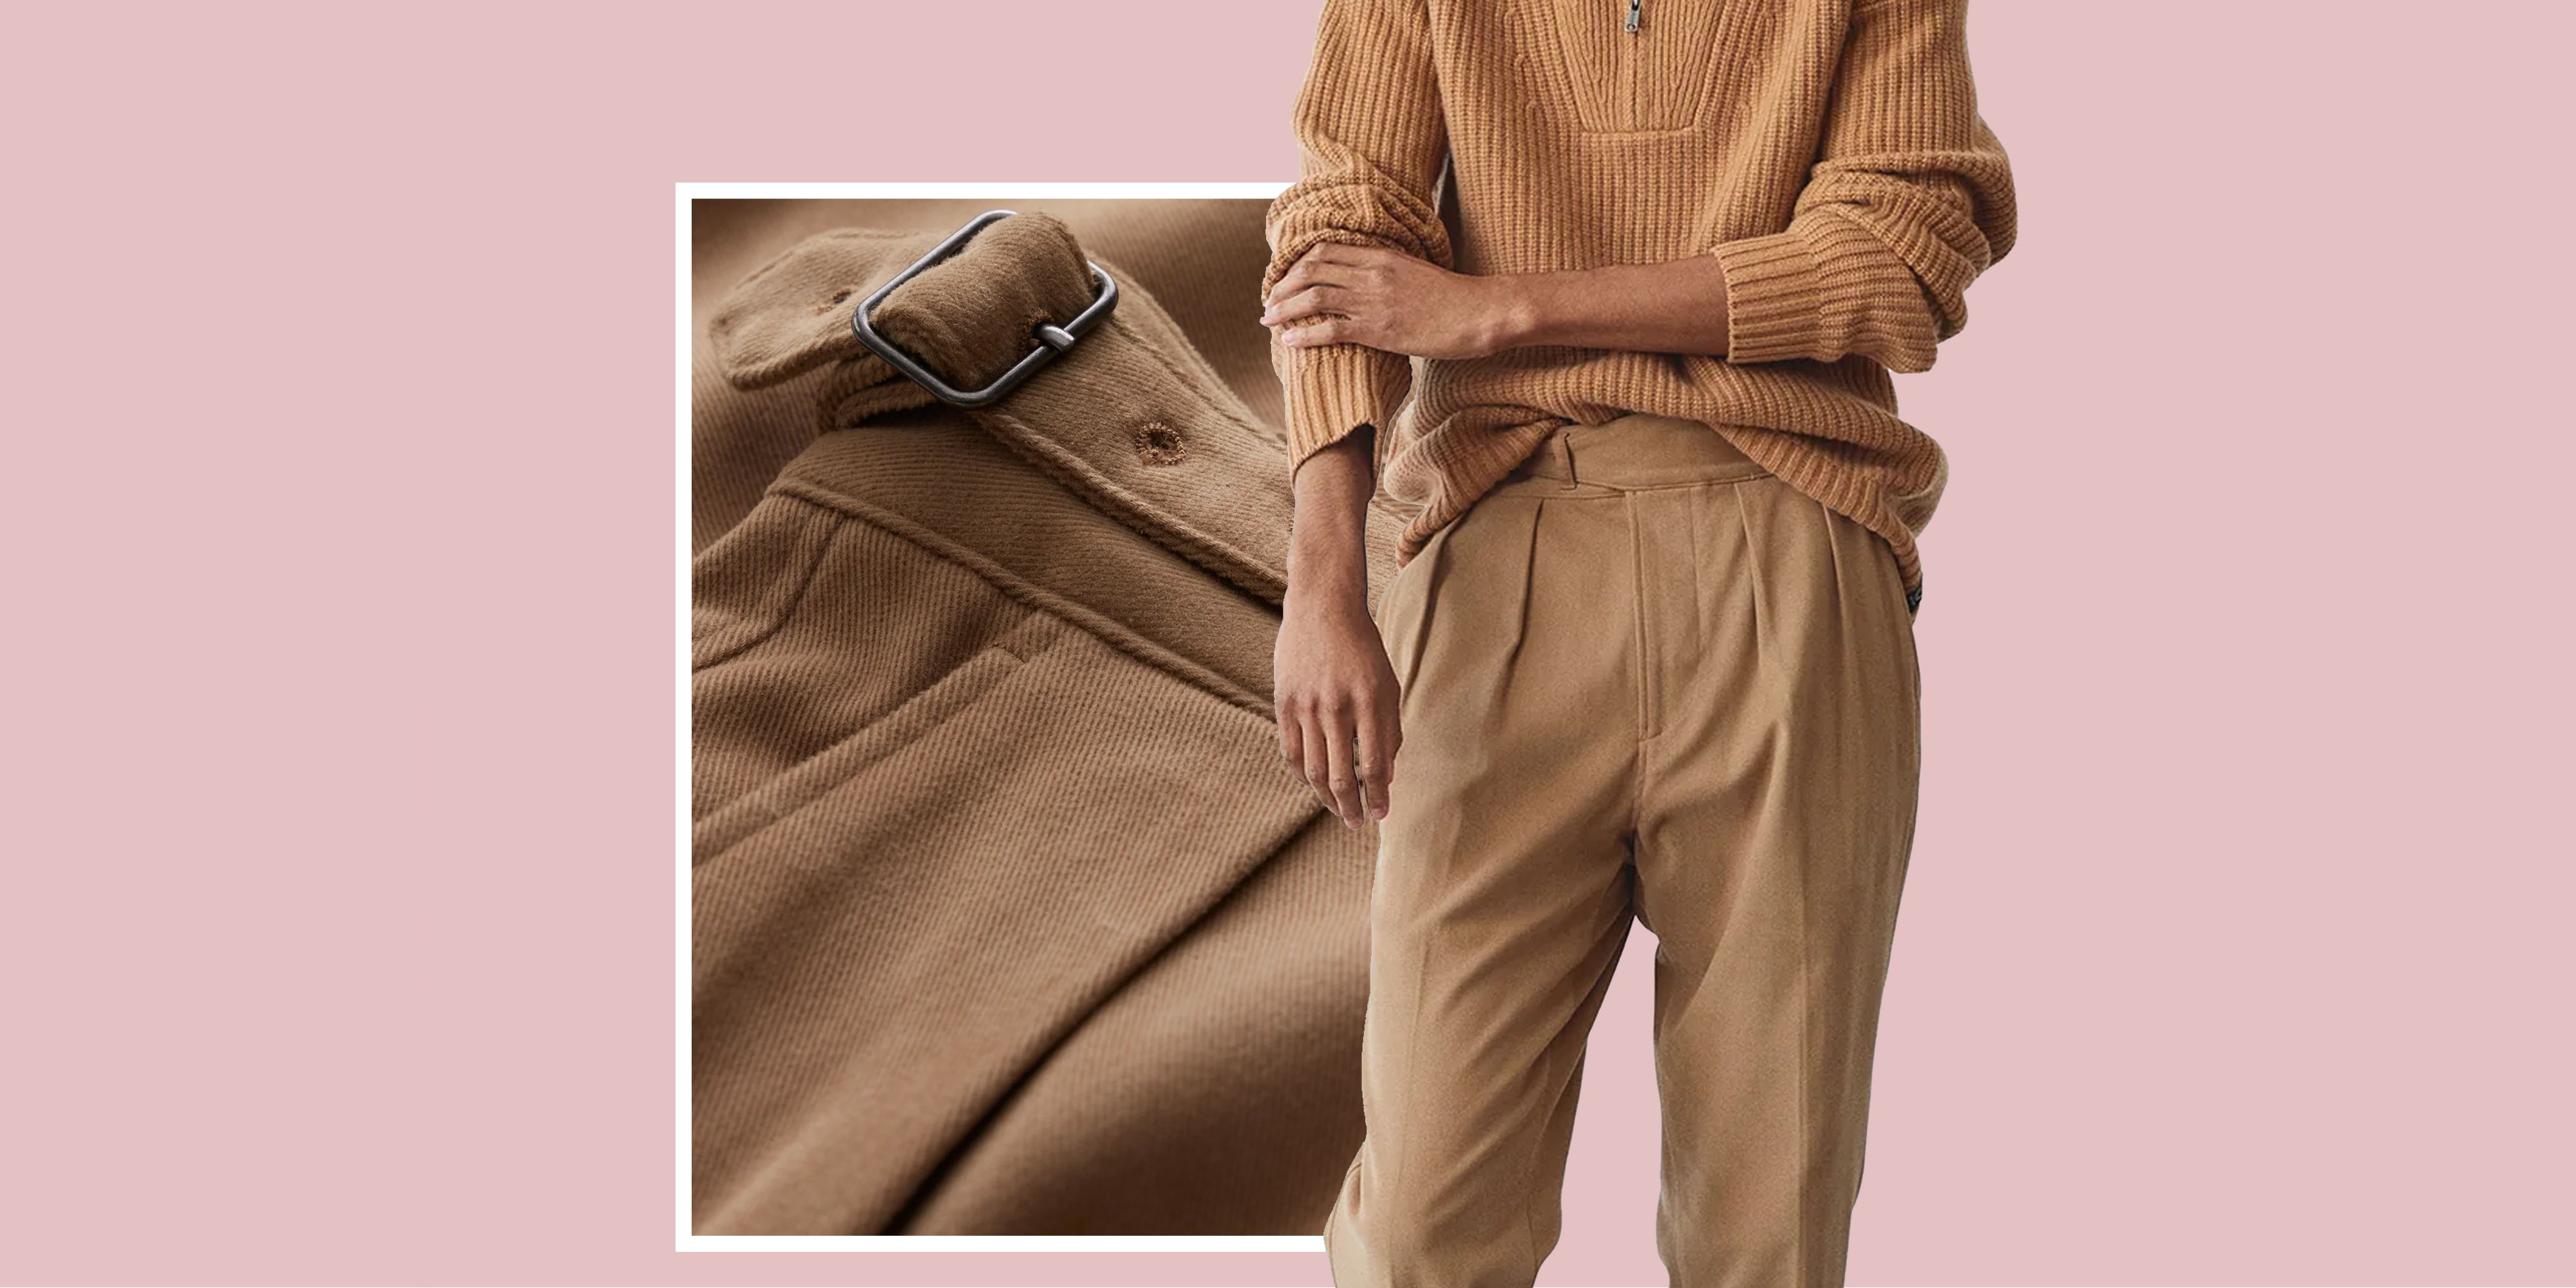 Polo Ralph Lauren Pants for Men, Online Sale up to 60% off